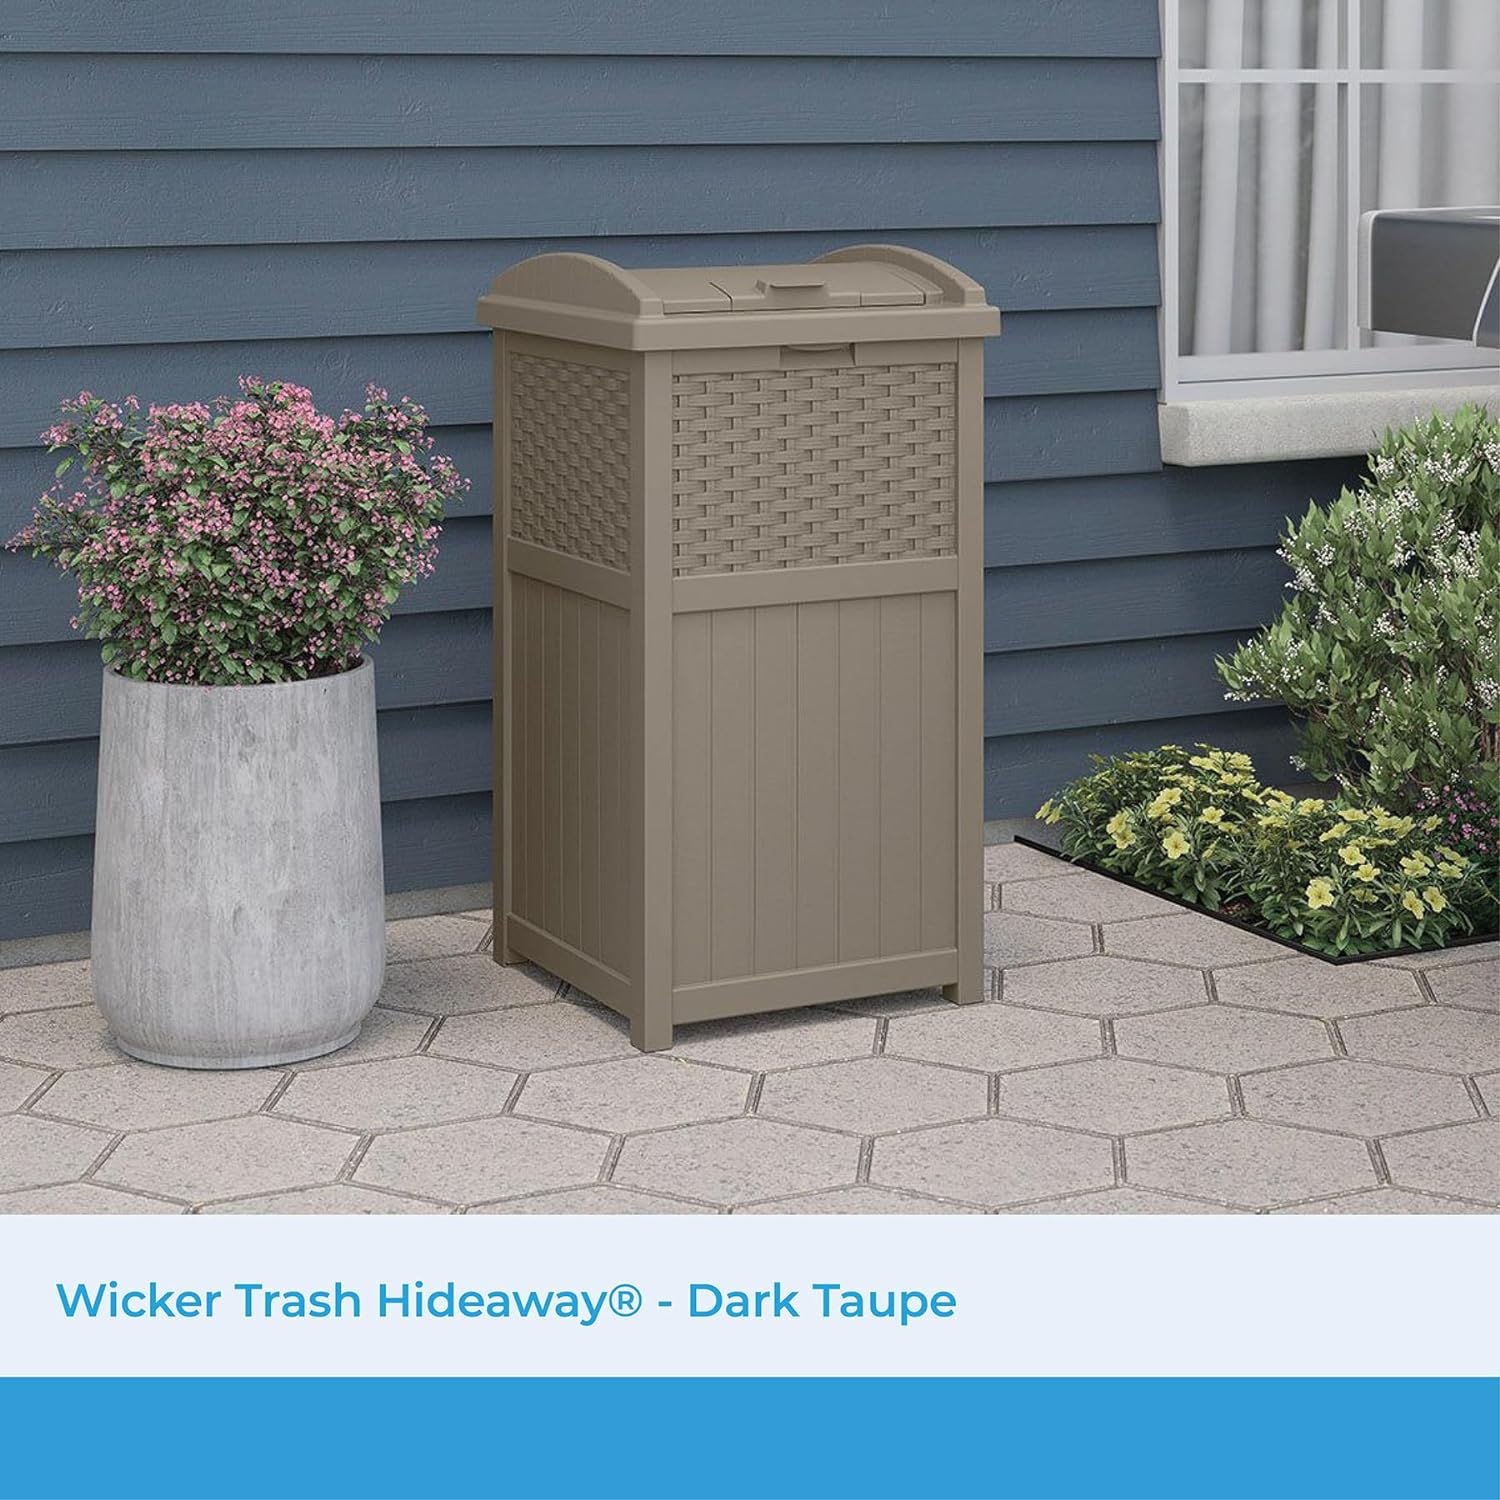 33 Gallon Hideaway Outdoor Trash Can with Lid Trash Bin Use Backyard Deck  Patio